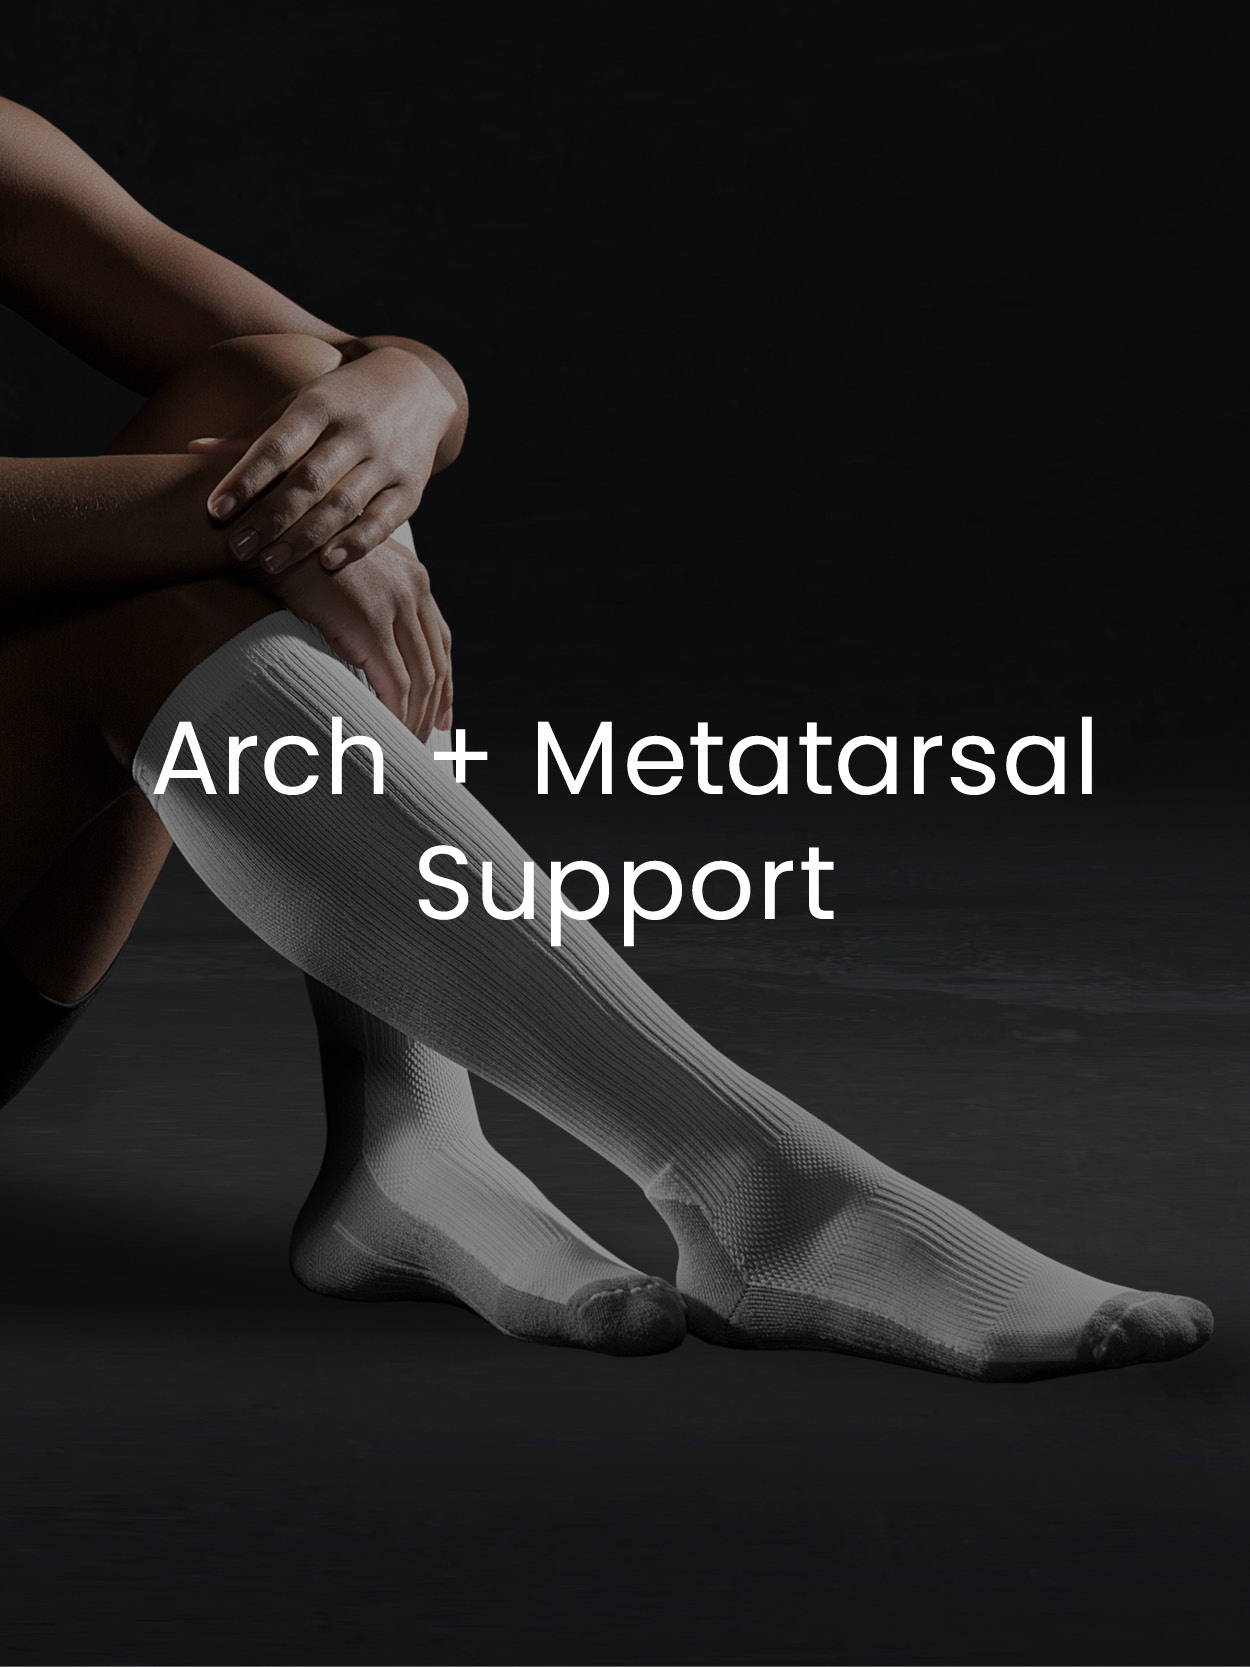 Arch + Metatarsal Support